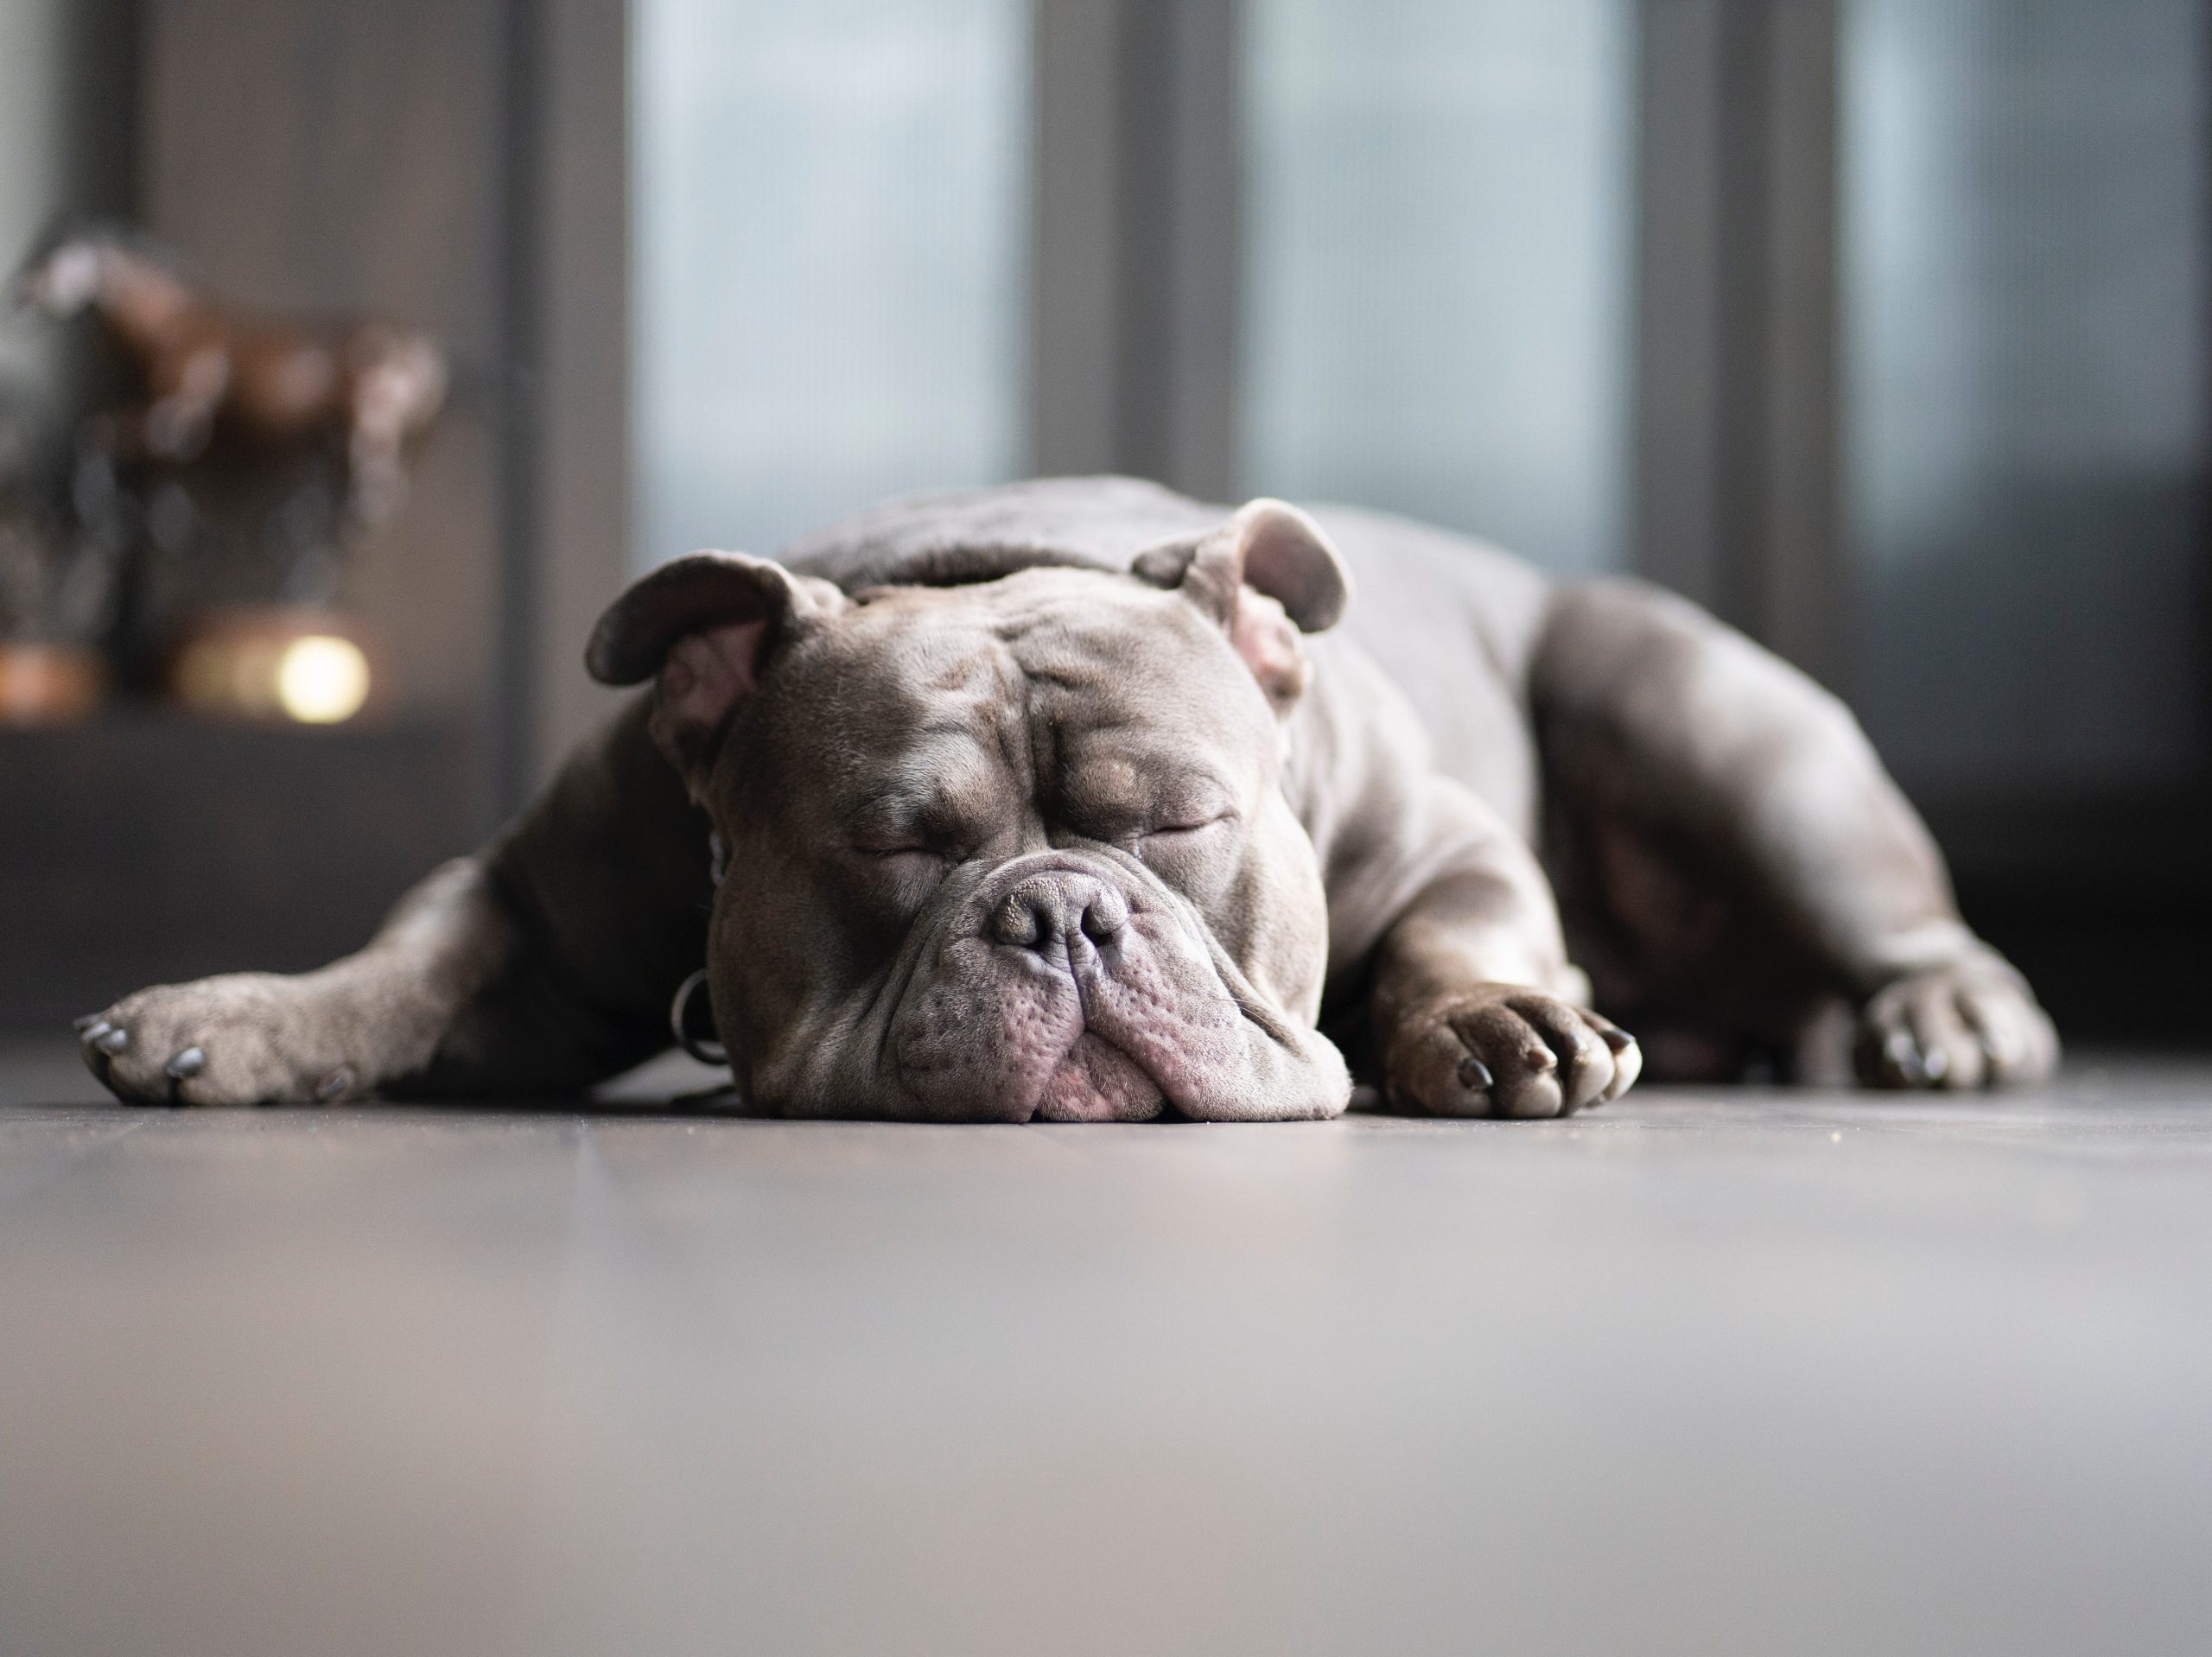 brachycephalic breed dog snoring because of short muzzle 